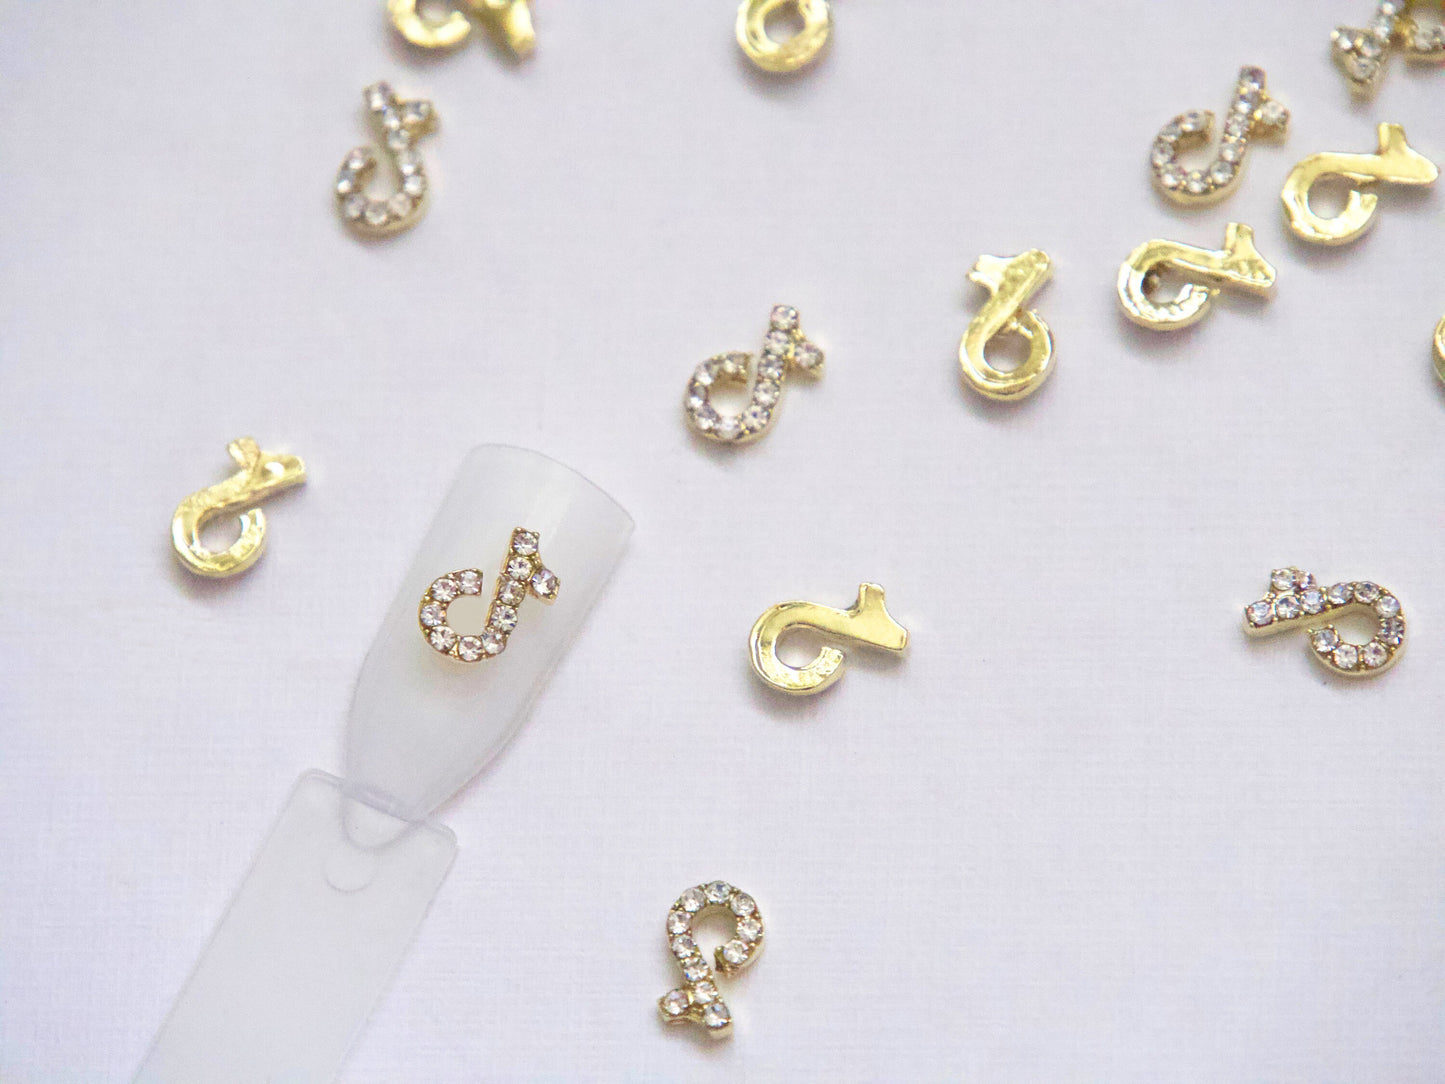 2pcs Tik Tok Brand Sign Nail Decoration/ Gold Shiny TK Influencer DIY Deco Charm for Nail Art Decal/ Press on nail supply